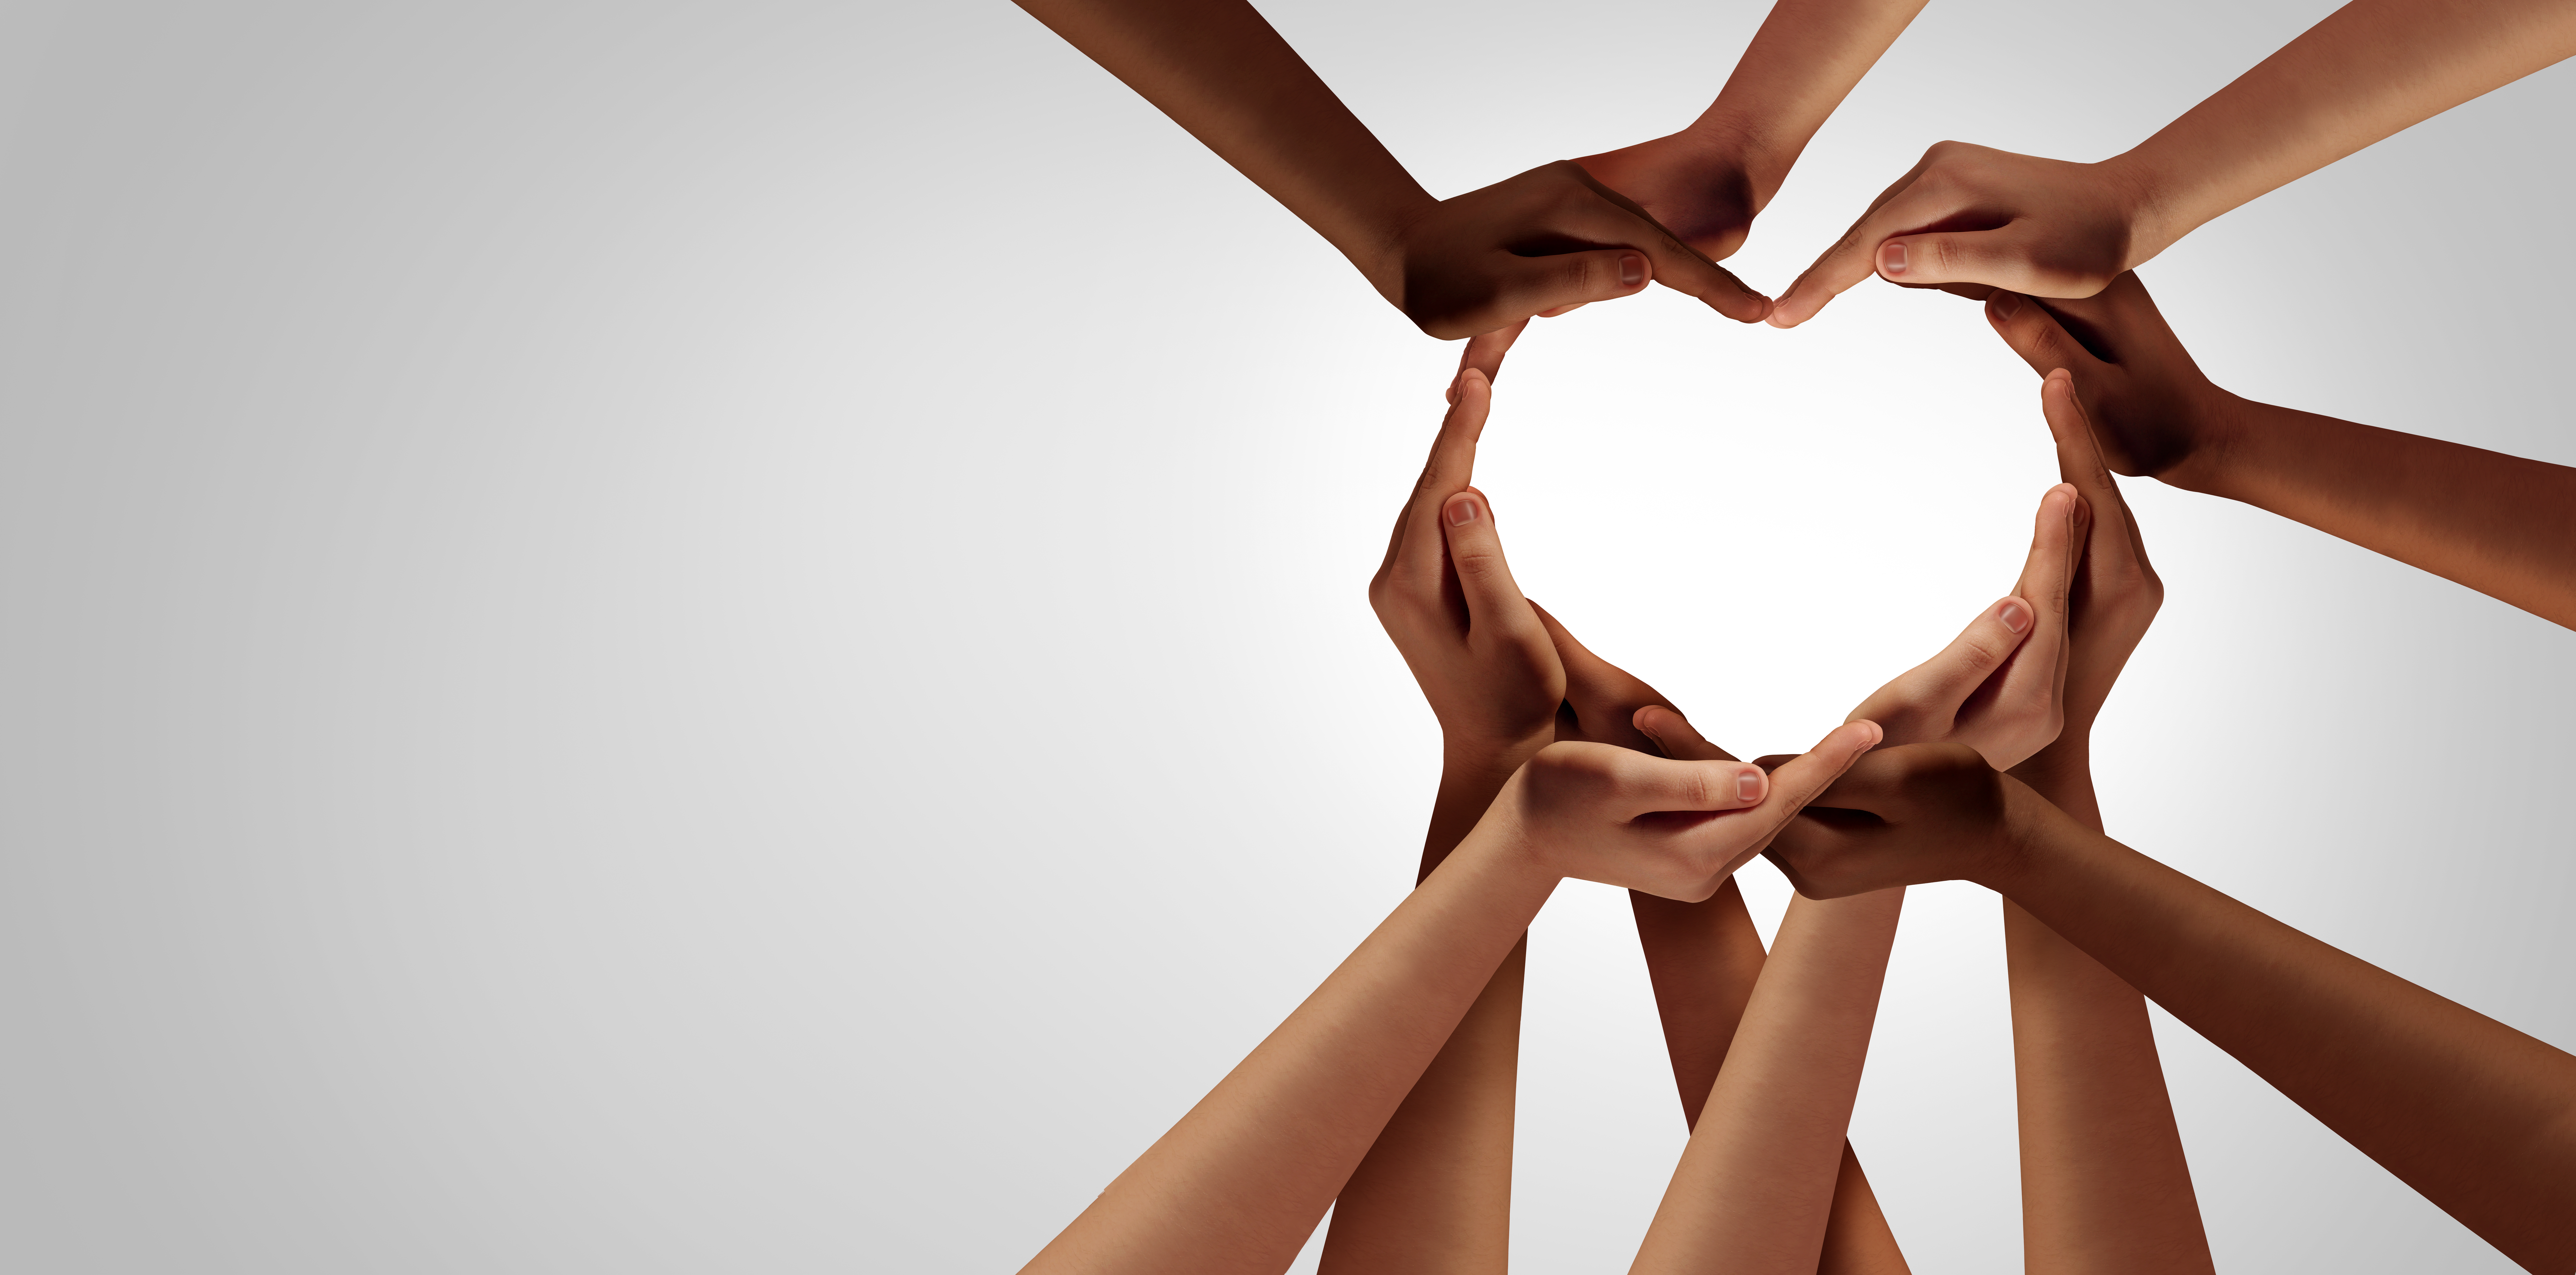 unity-diversity-partnership-heart-hands-group